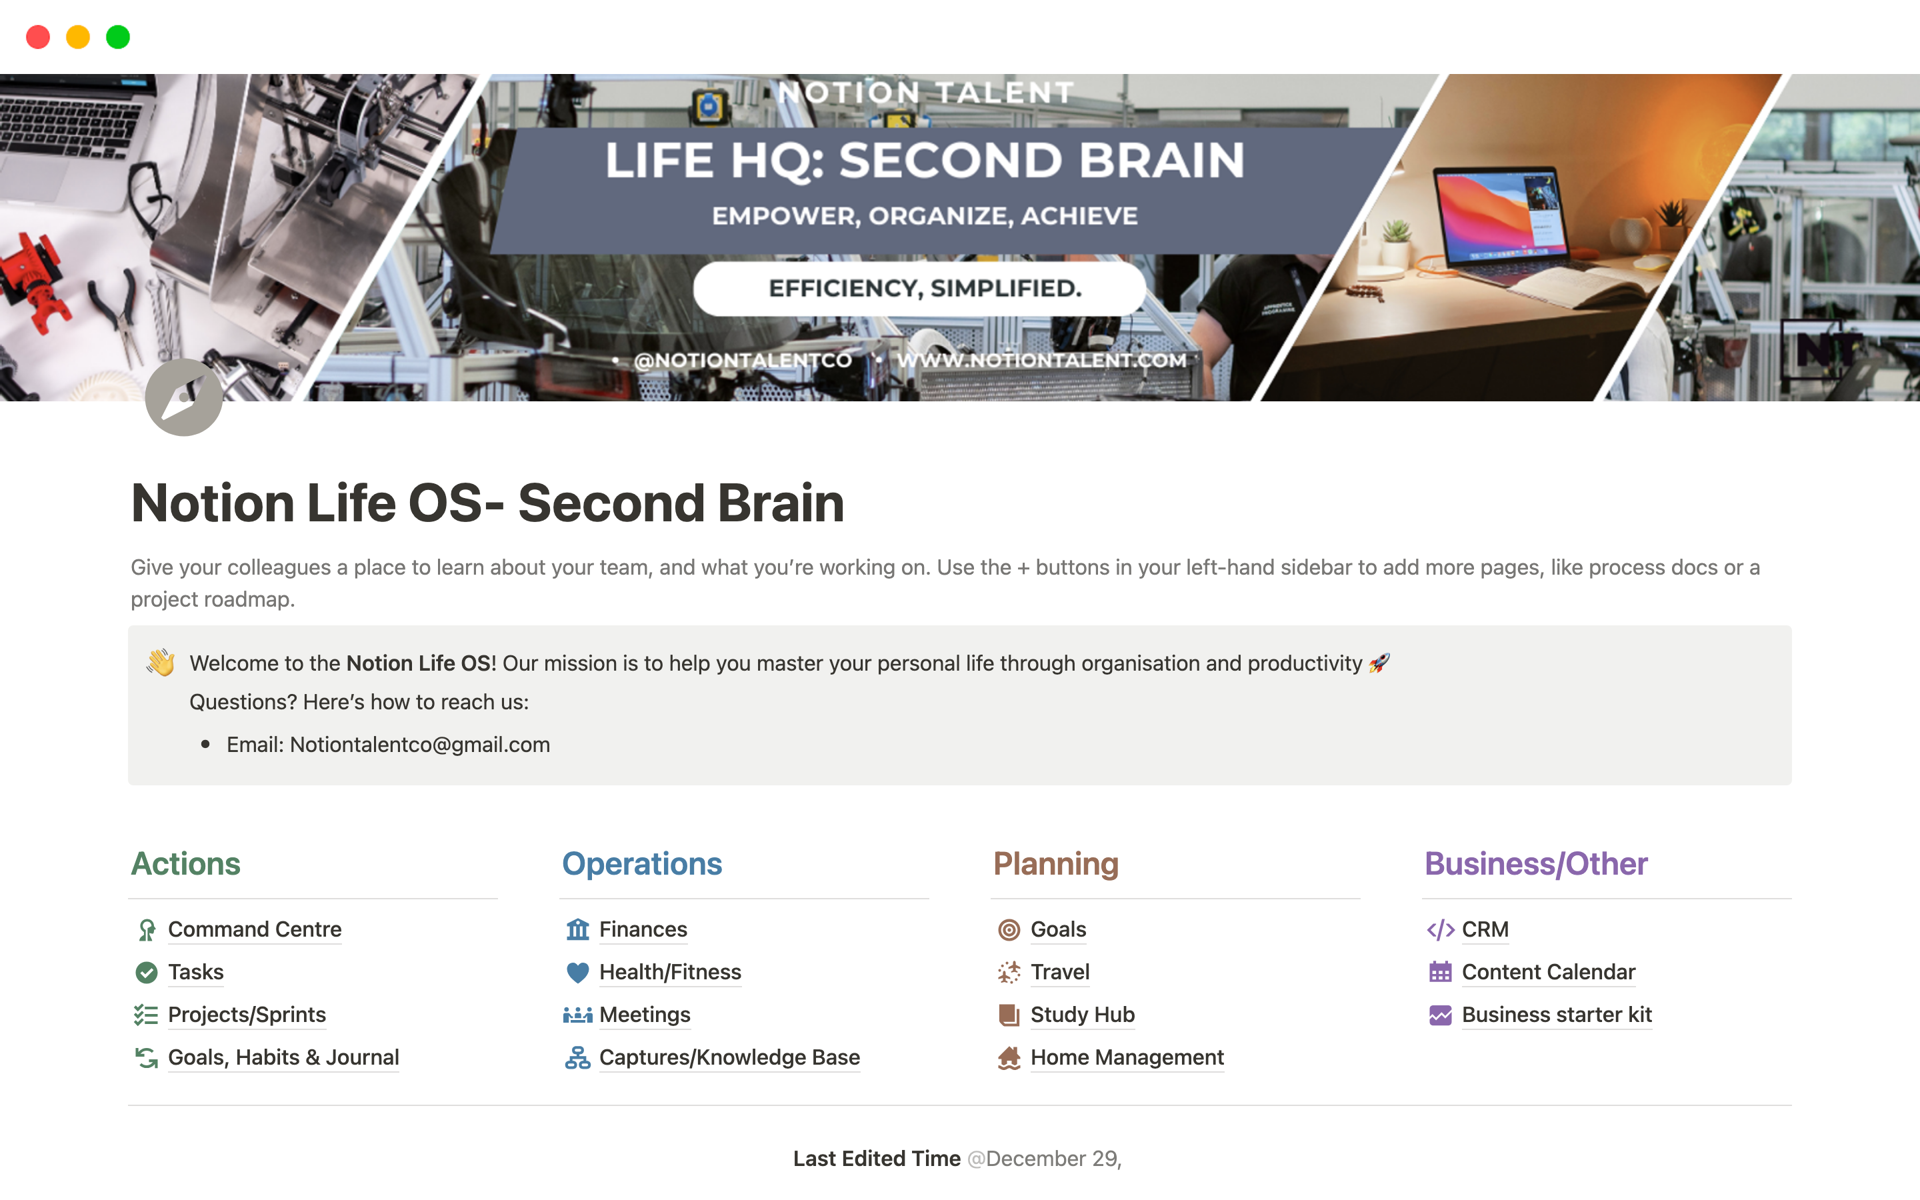 Life OS - Second Brain 님의 템플릿 미리보기